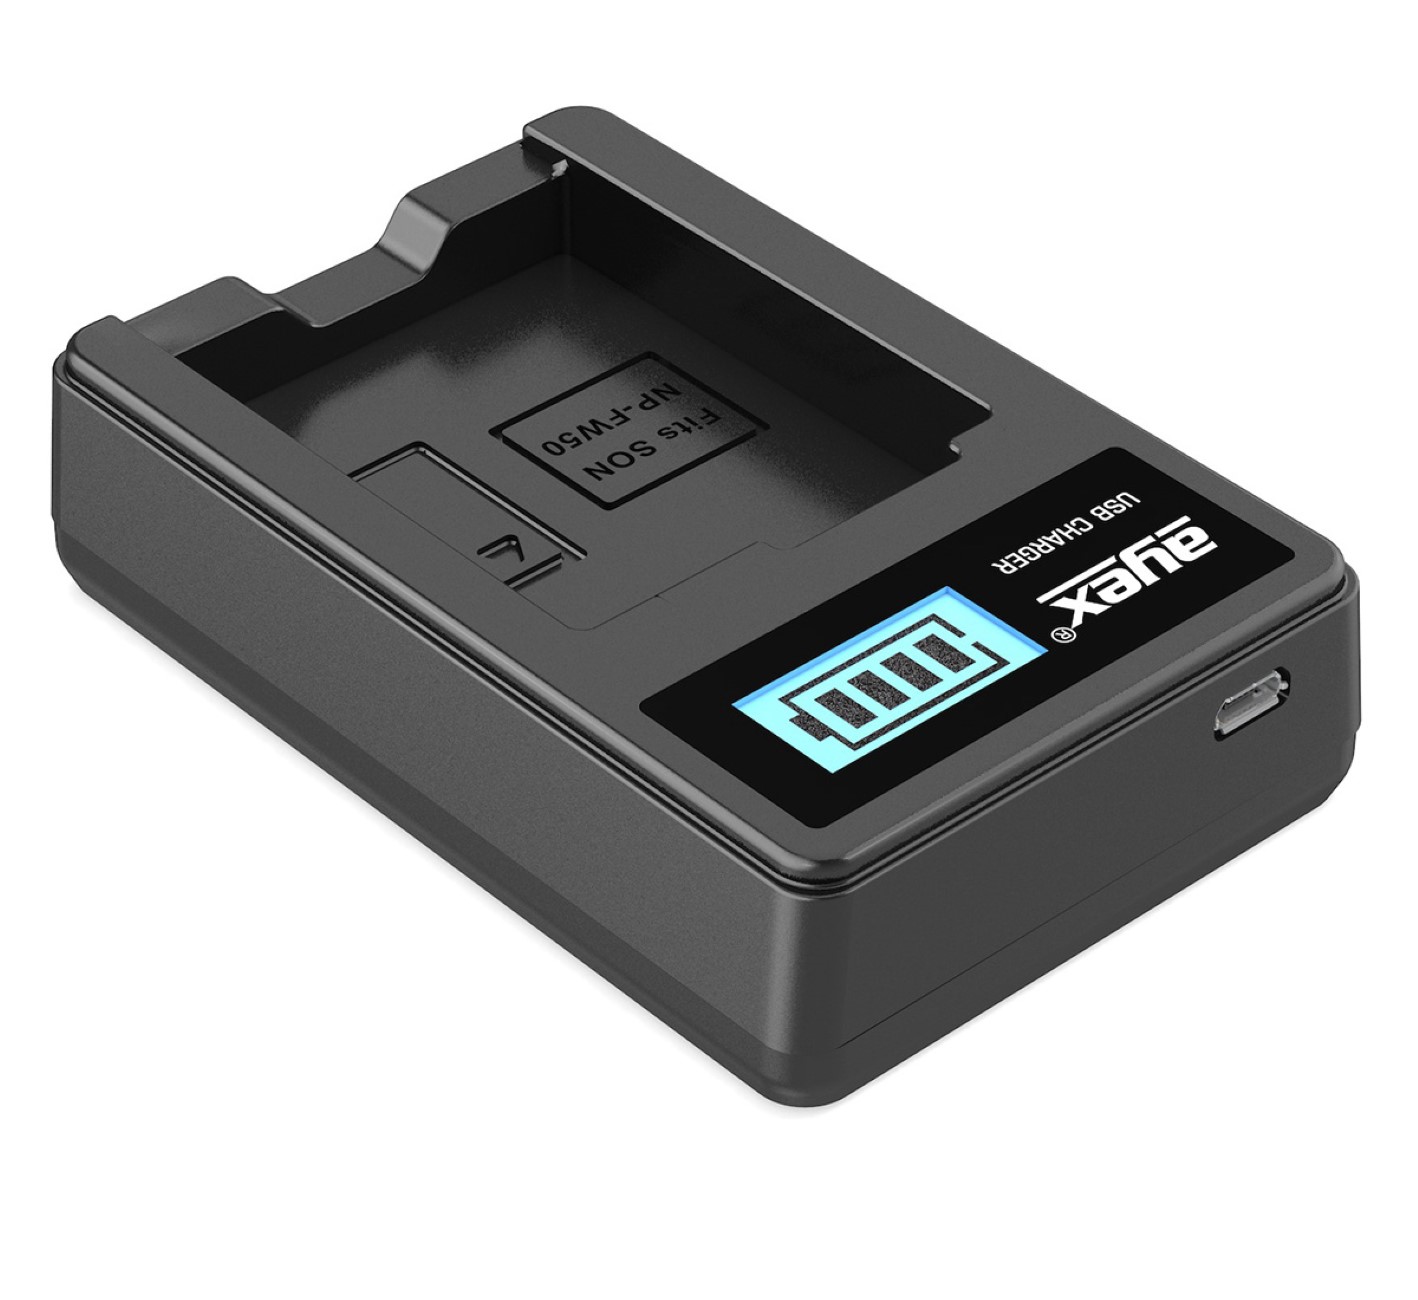 ayex USB Ladegerät für Sony NP-FW50 Akku